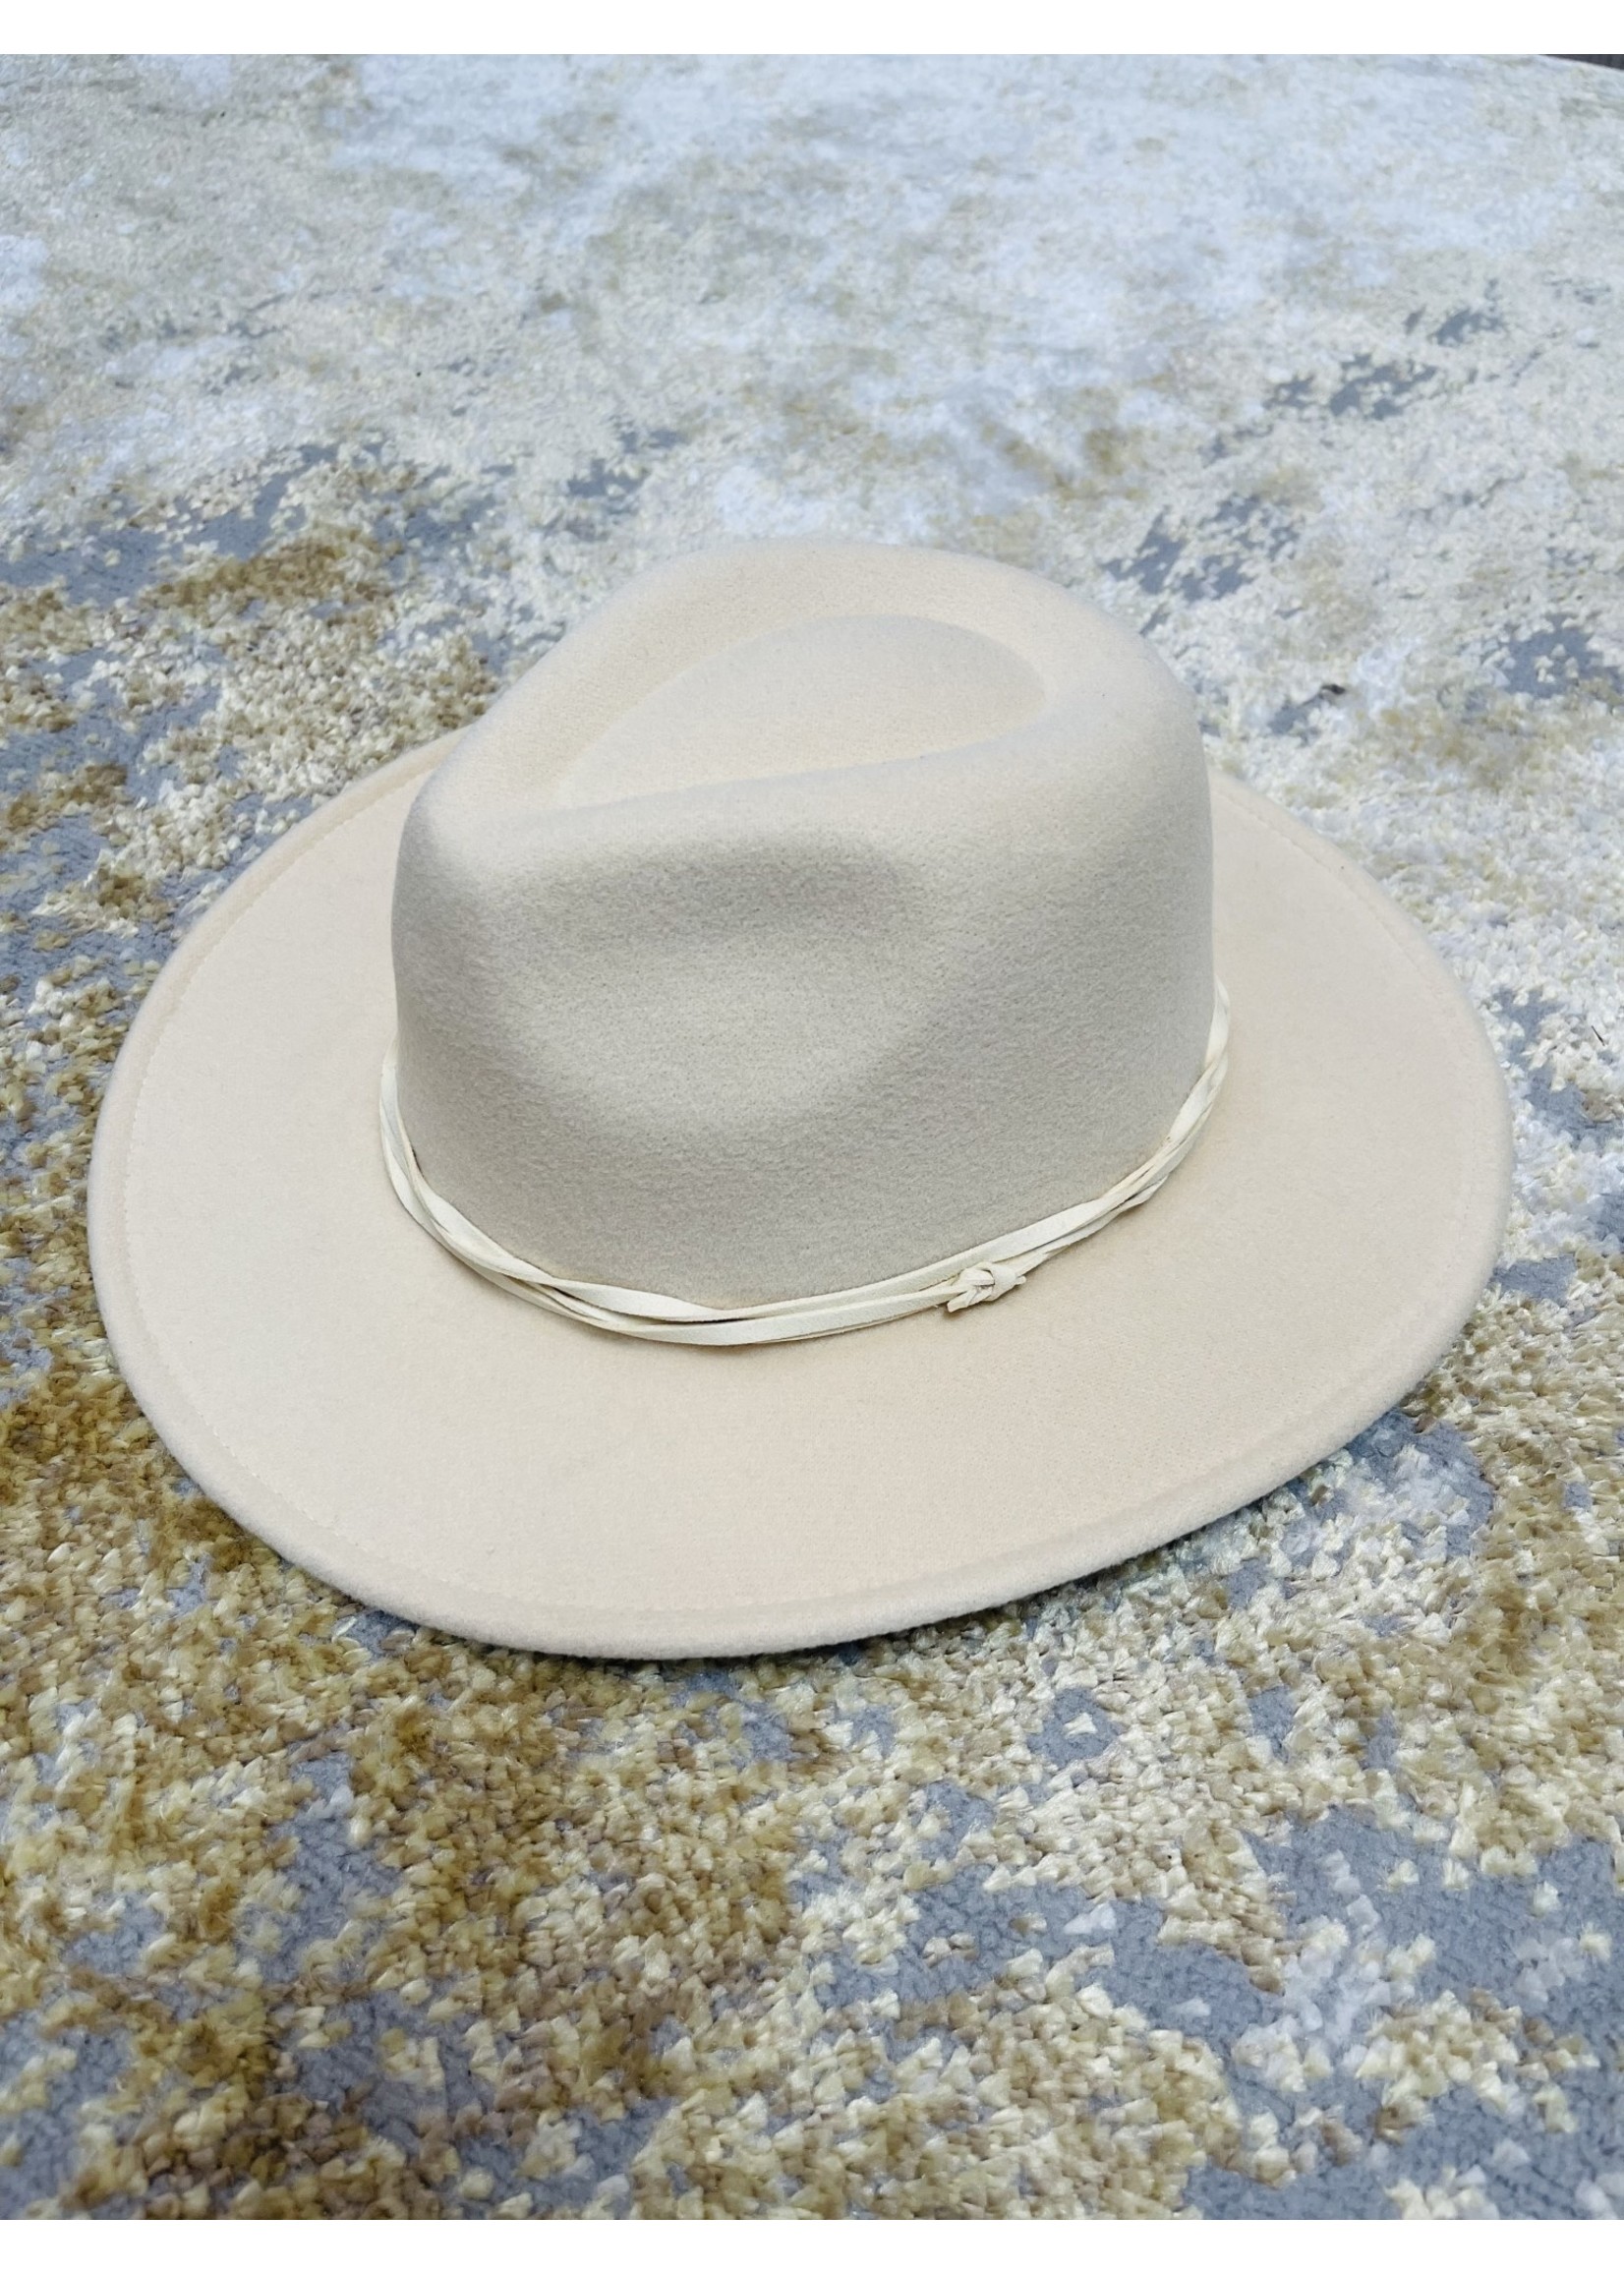 Mud Pie Felt Fedora Hat With Band